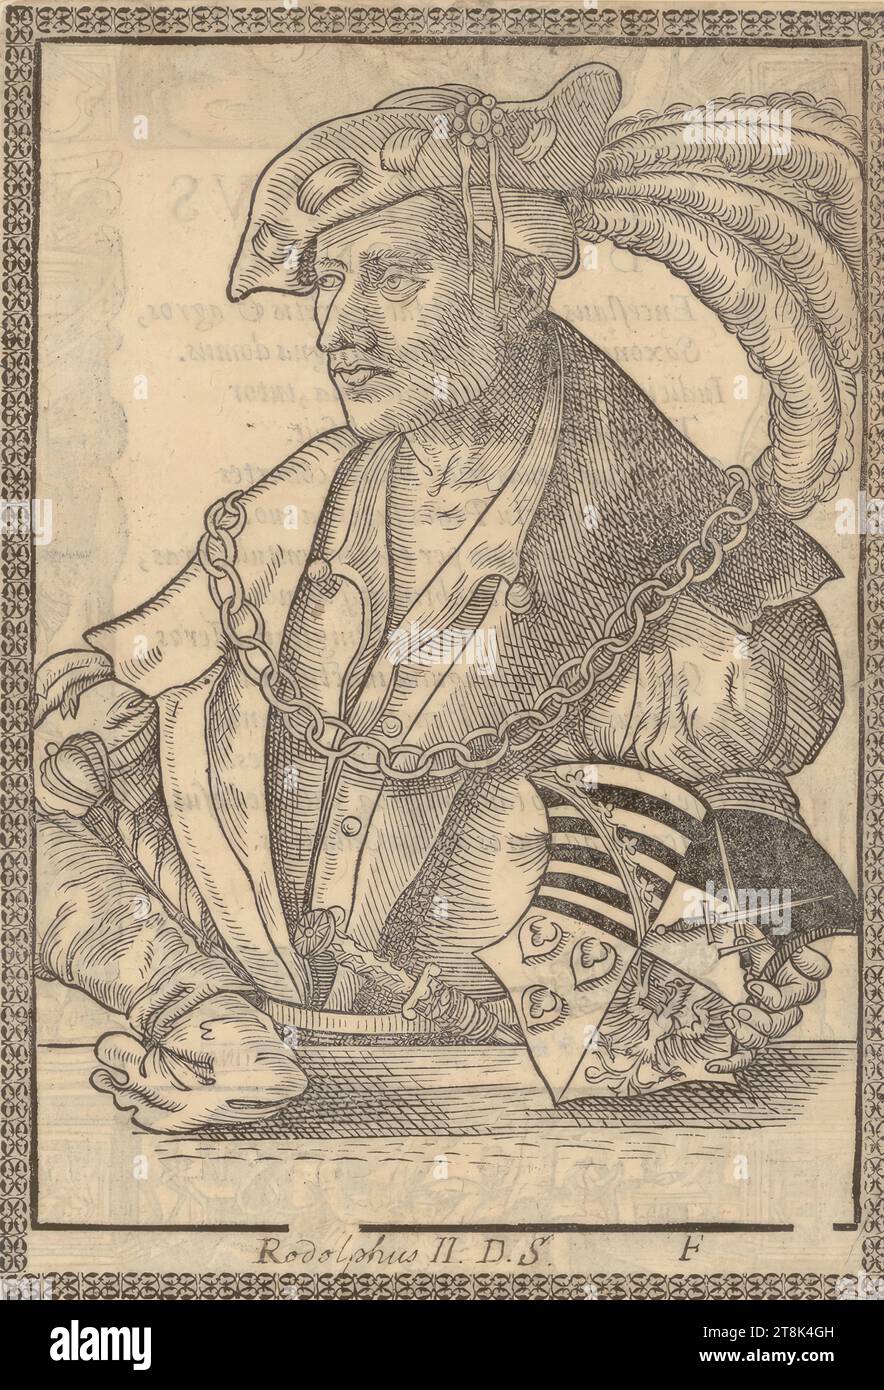 Portrait of Rudolf II, Duke and Elector of Saxony, ILLVSTRISSIMO PRINCIPI AC DOMINO, DOMINO, AVGVSTO, DVCI SAXONIAE ELECTORI, SACRI ROMANI IMPERII ARCHImarschallo, Landgrauio Thuringiæ, Marchioni Misniae, Burggrauio Magedburgensi, Domini suo clementissimo, S.D, 34 portraits of Saxon princes, Lucas Cranach d. J., Wittenberg 1515 - 1586 Weimar, 1563, print, woodcut, sheet: 18 × 12.4 cm, m.u. 'Rudolphus II. D.S Stock Photo